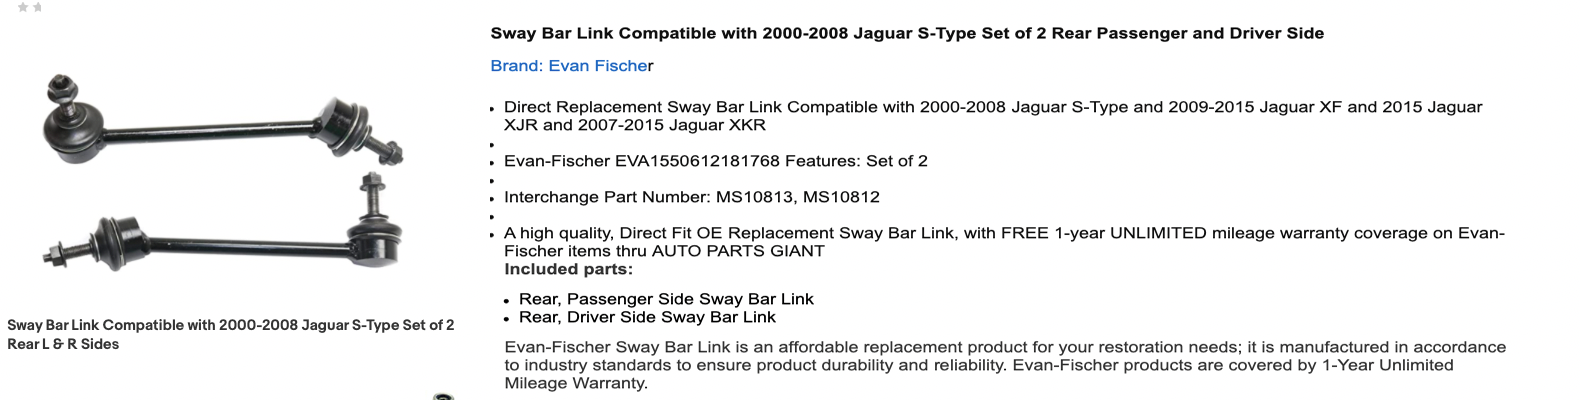 Steering/Suspension - LOT of $1500 of BRAND NEW S-type Suspension Parts w DCCV Bonus for... - New - 2003 to 2008 Jaguar S-Type - San Bruno, CA 94066, United States